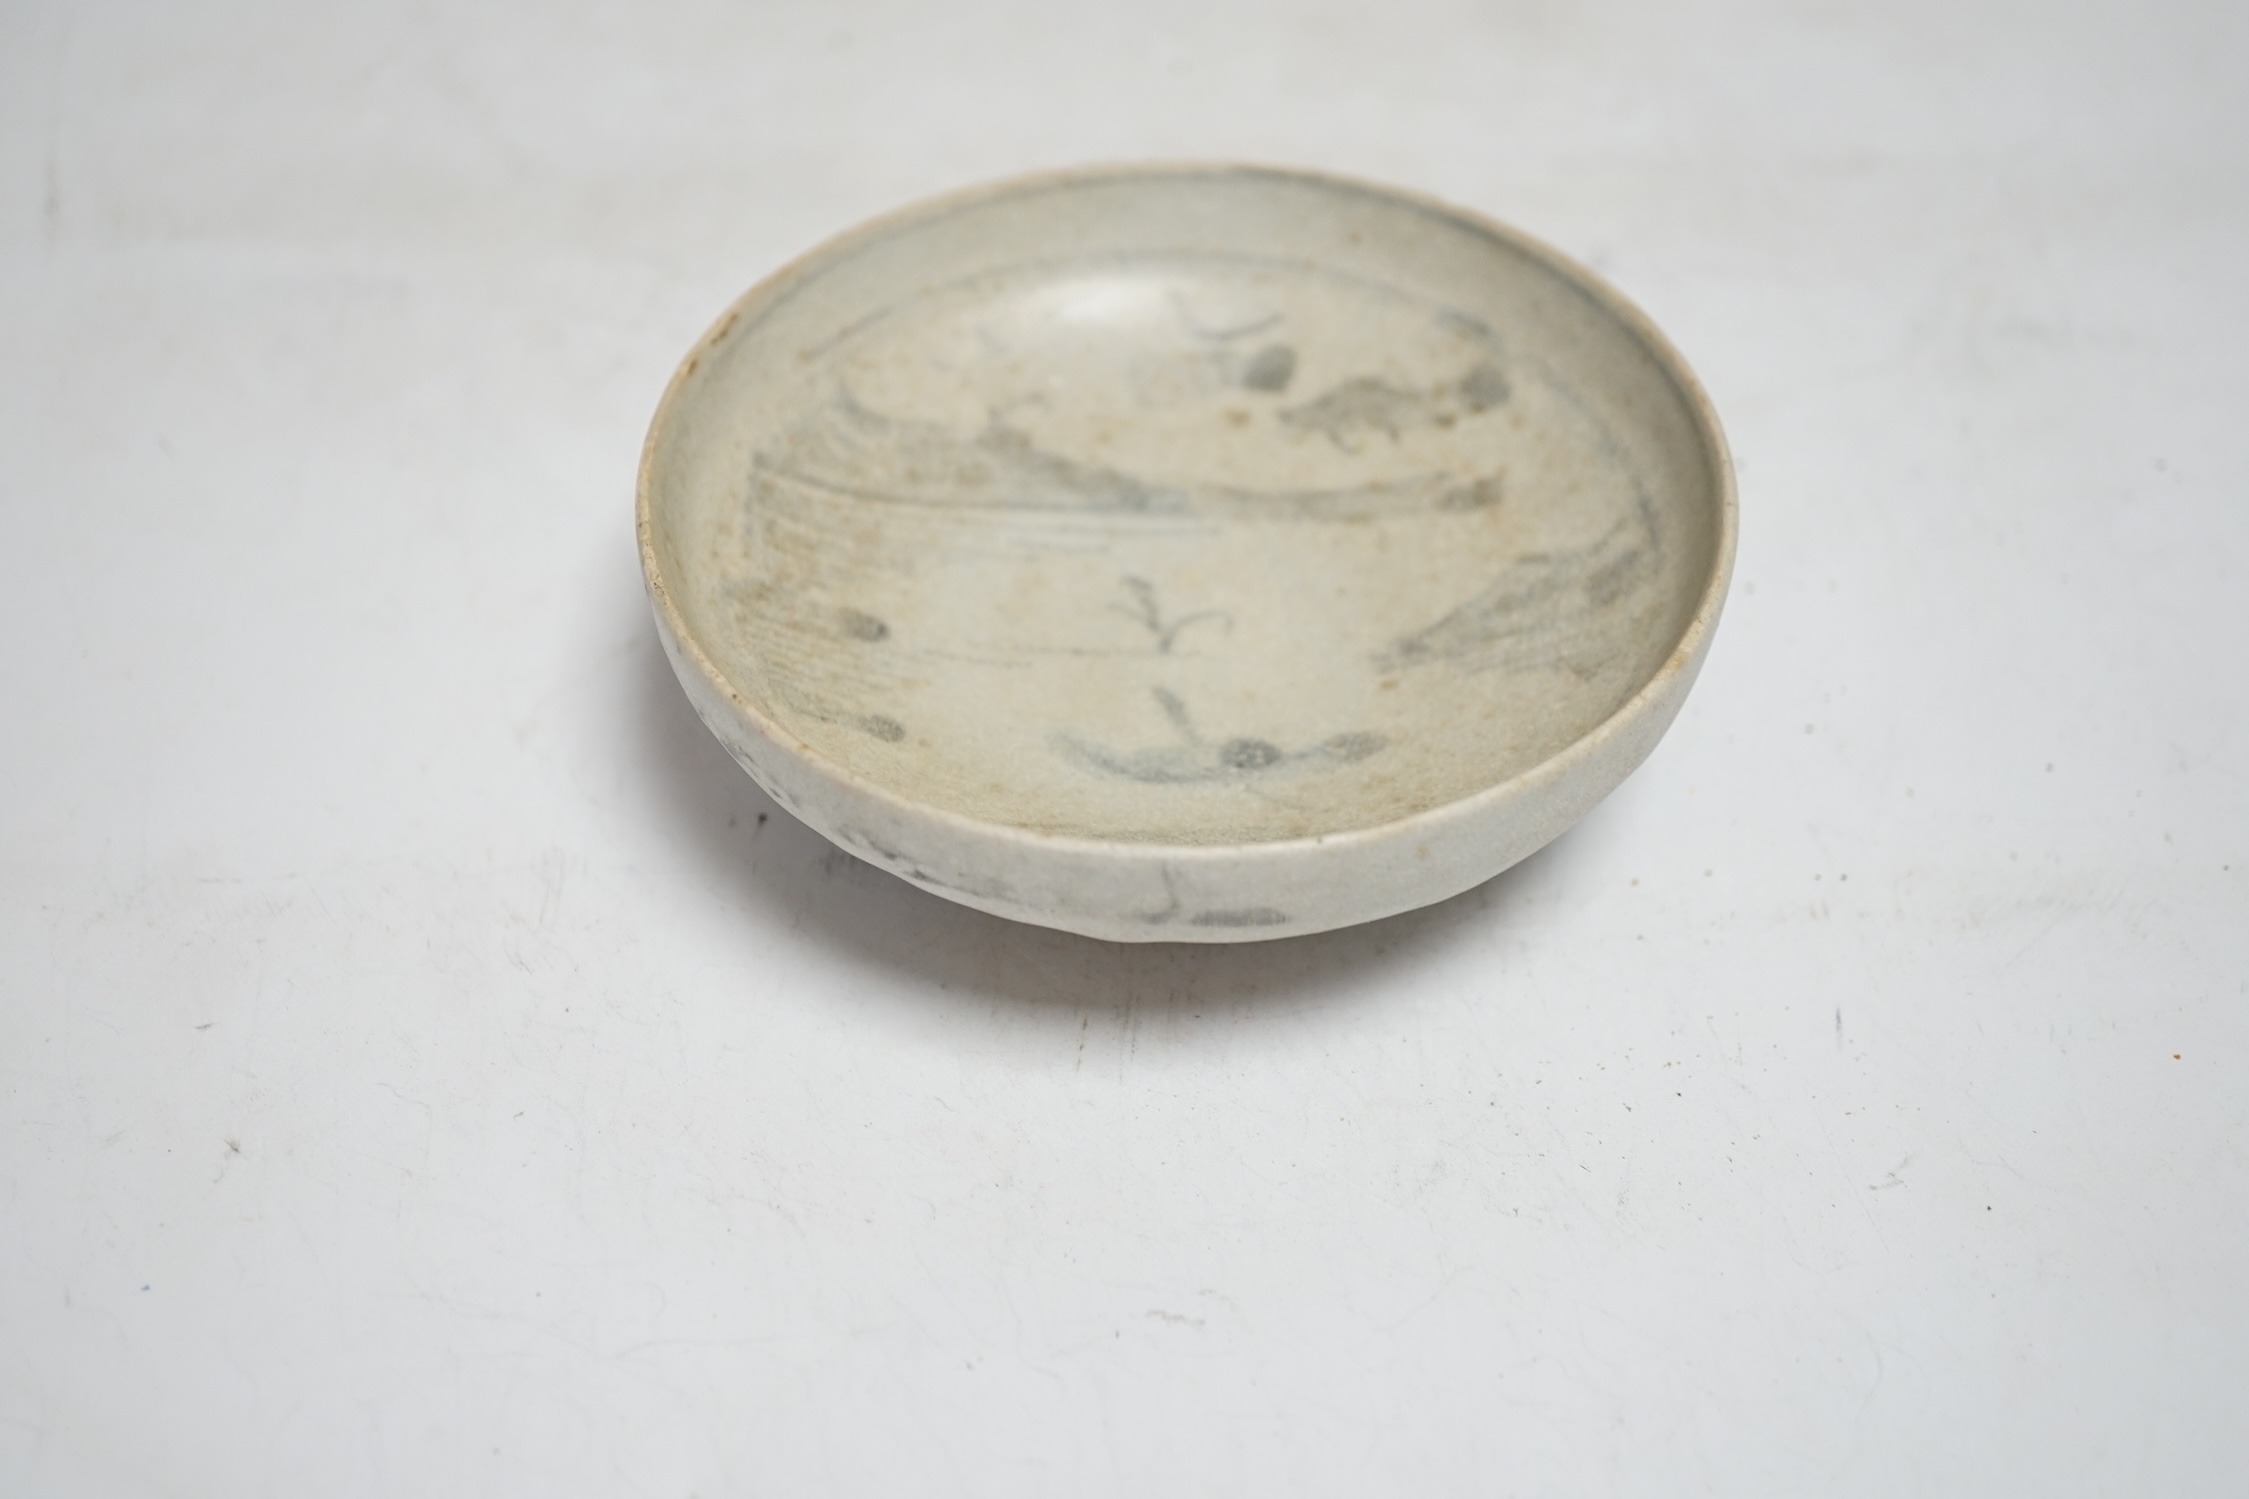 A Vung Tao cargo blue and white dish, 11.5cm diameter - Image 2 of 3